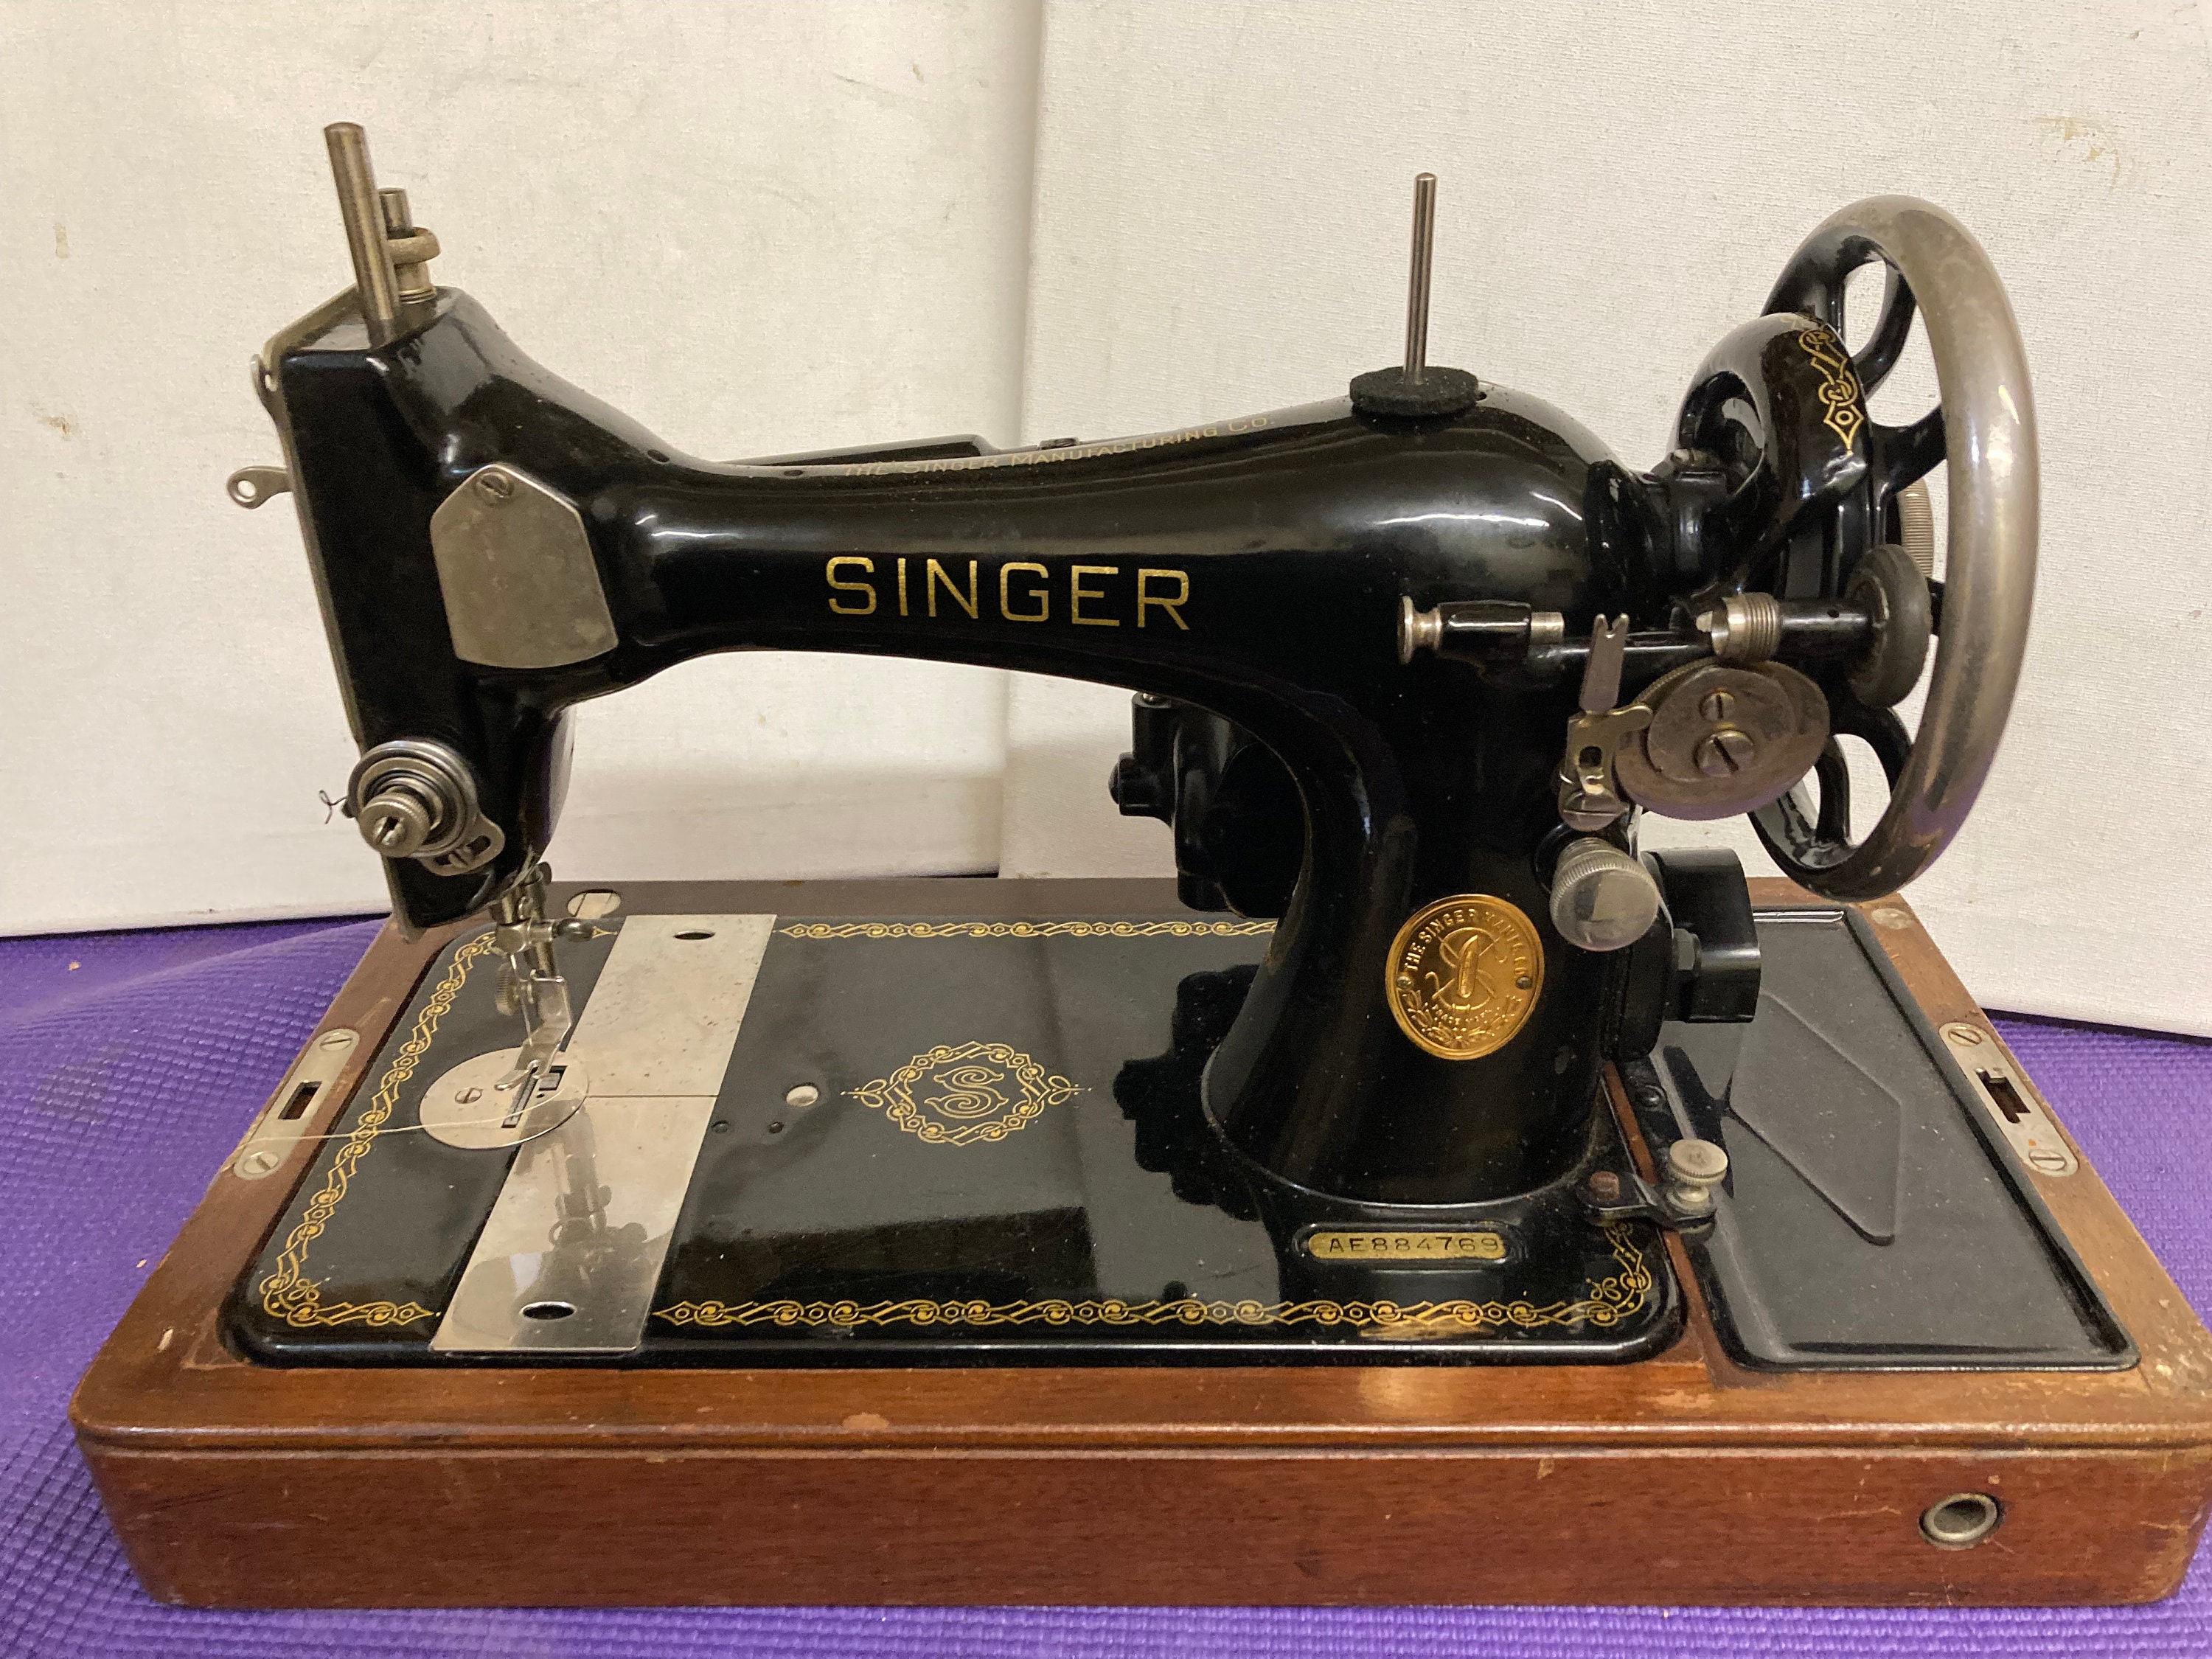 bourne swinger sewing machines